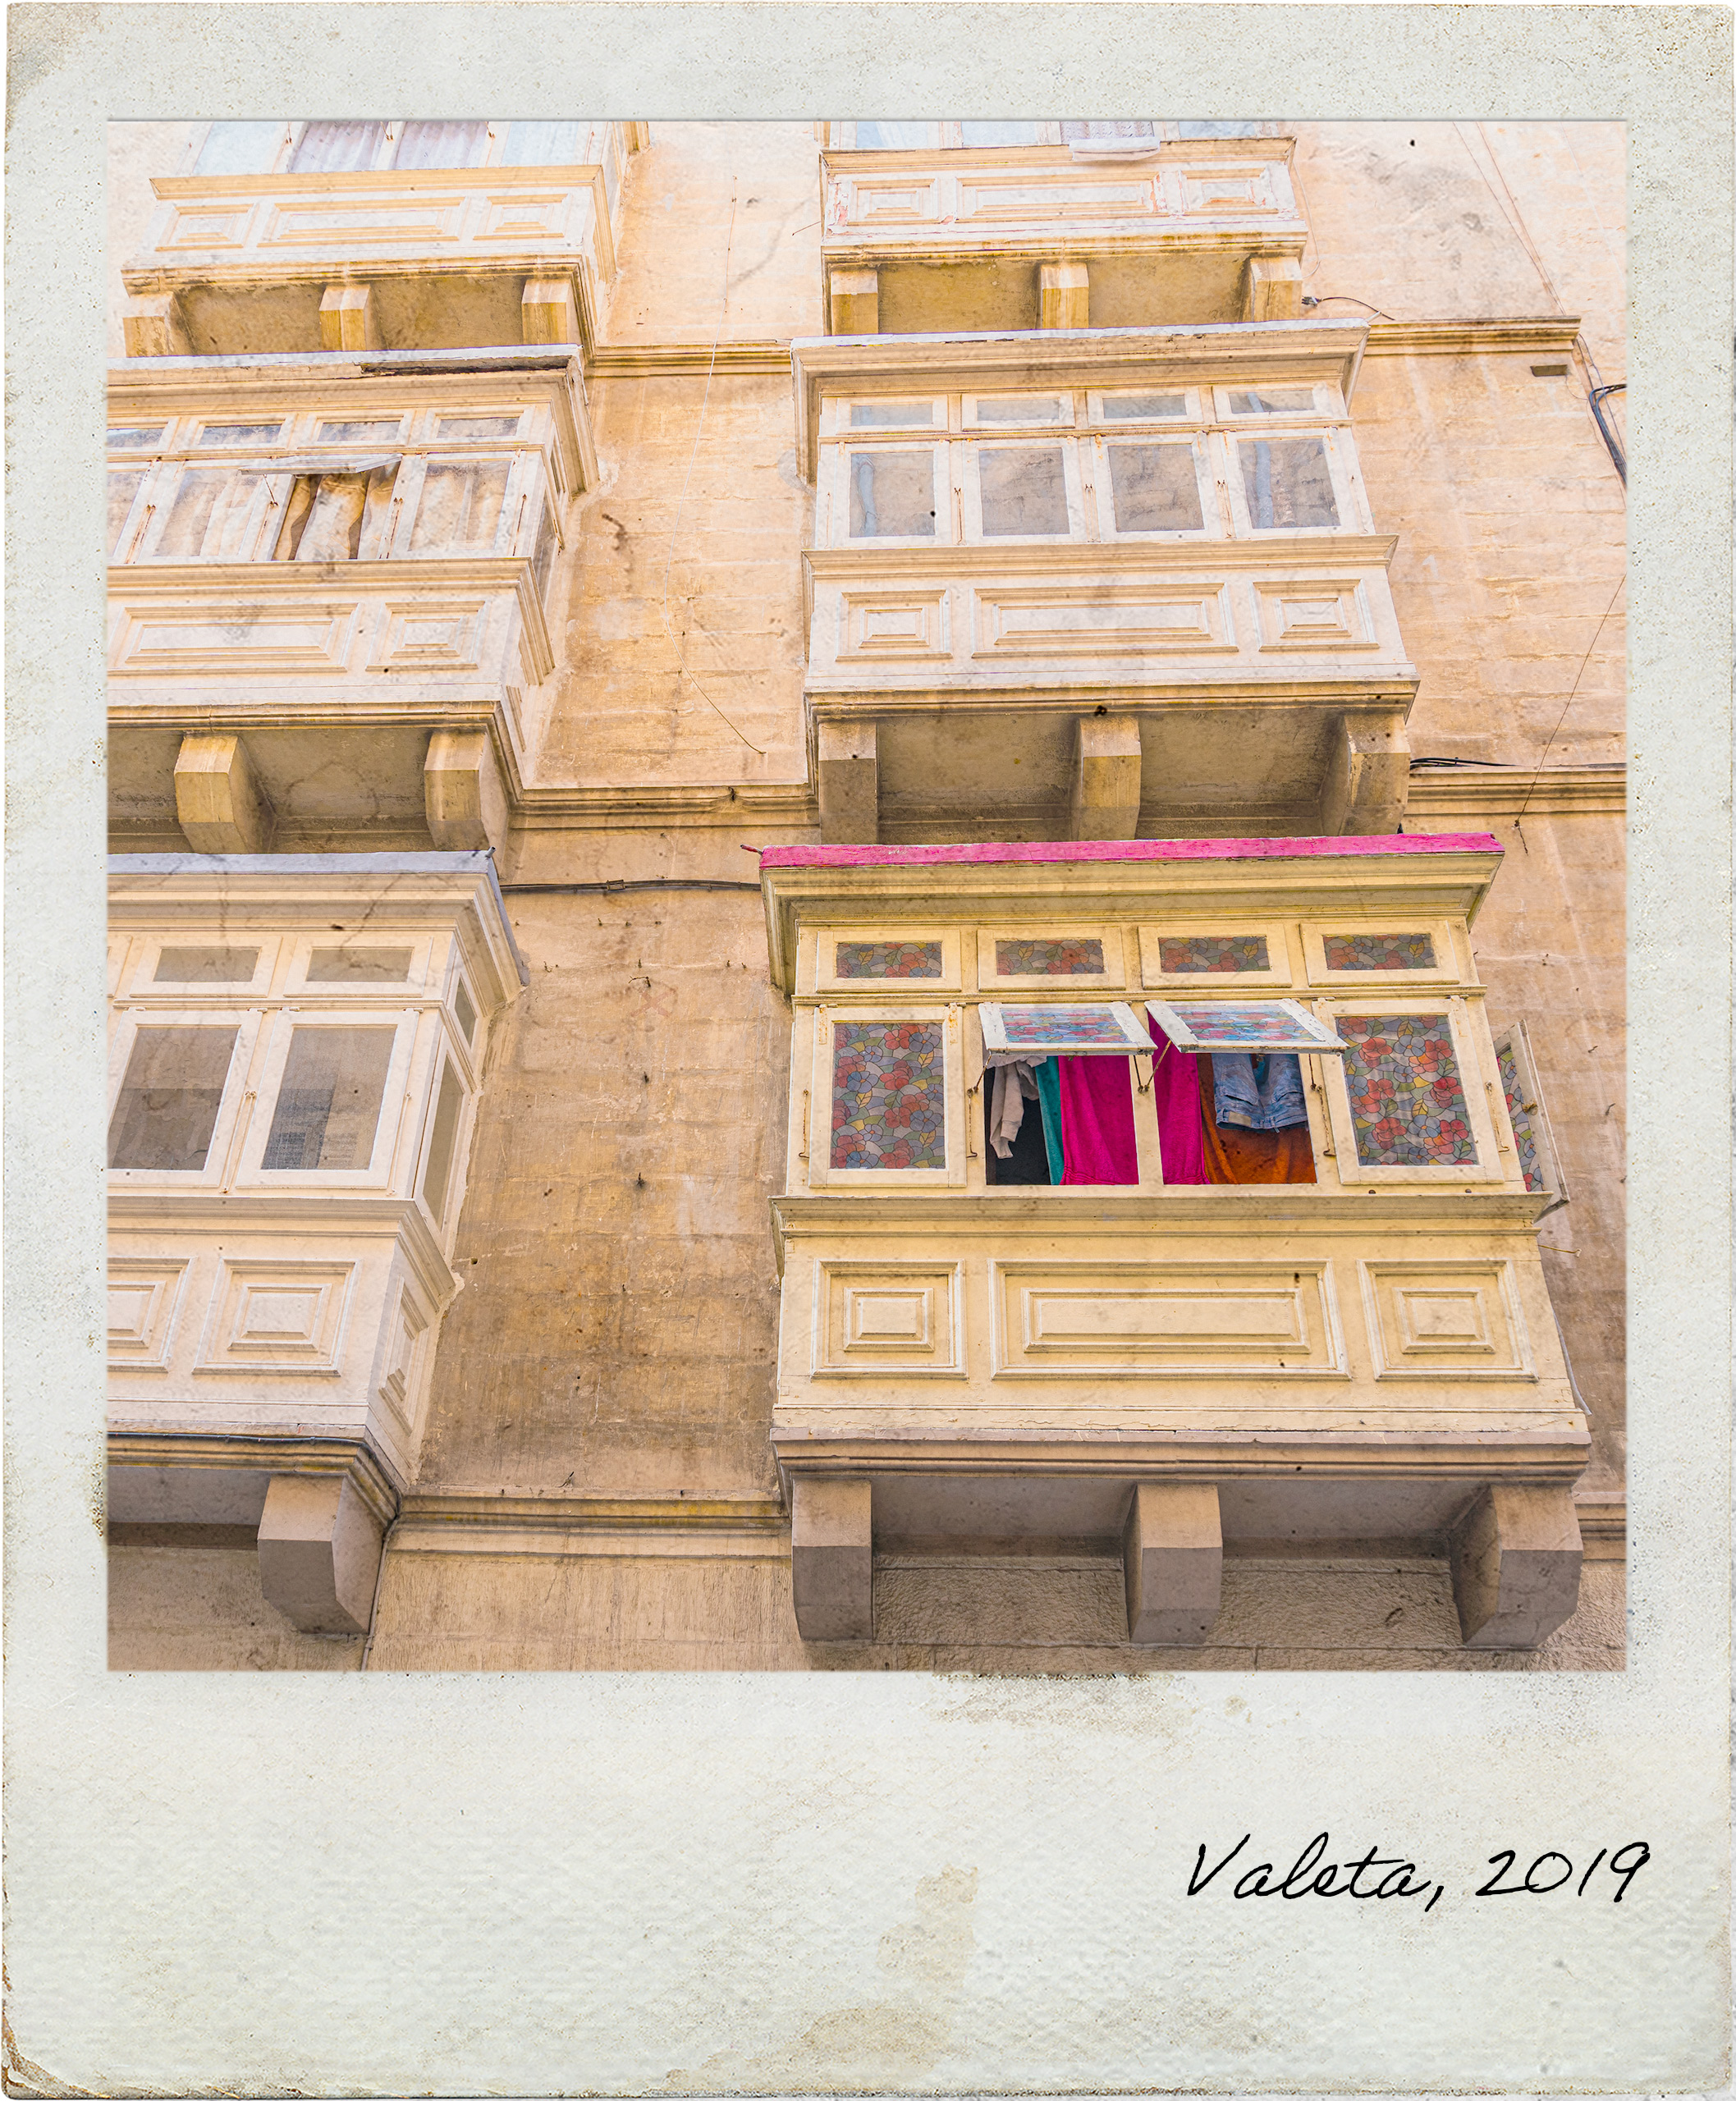 Windows in La Valetta